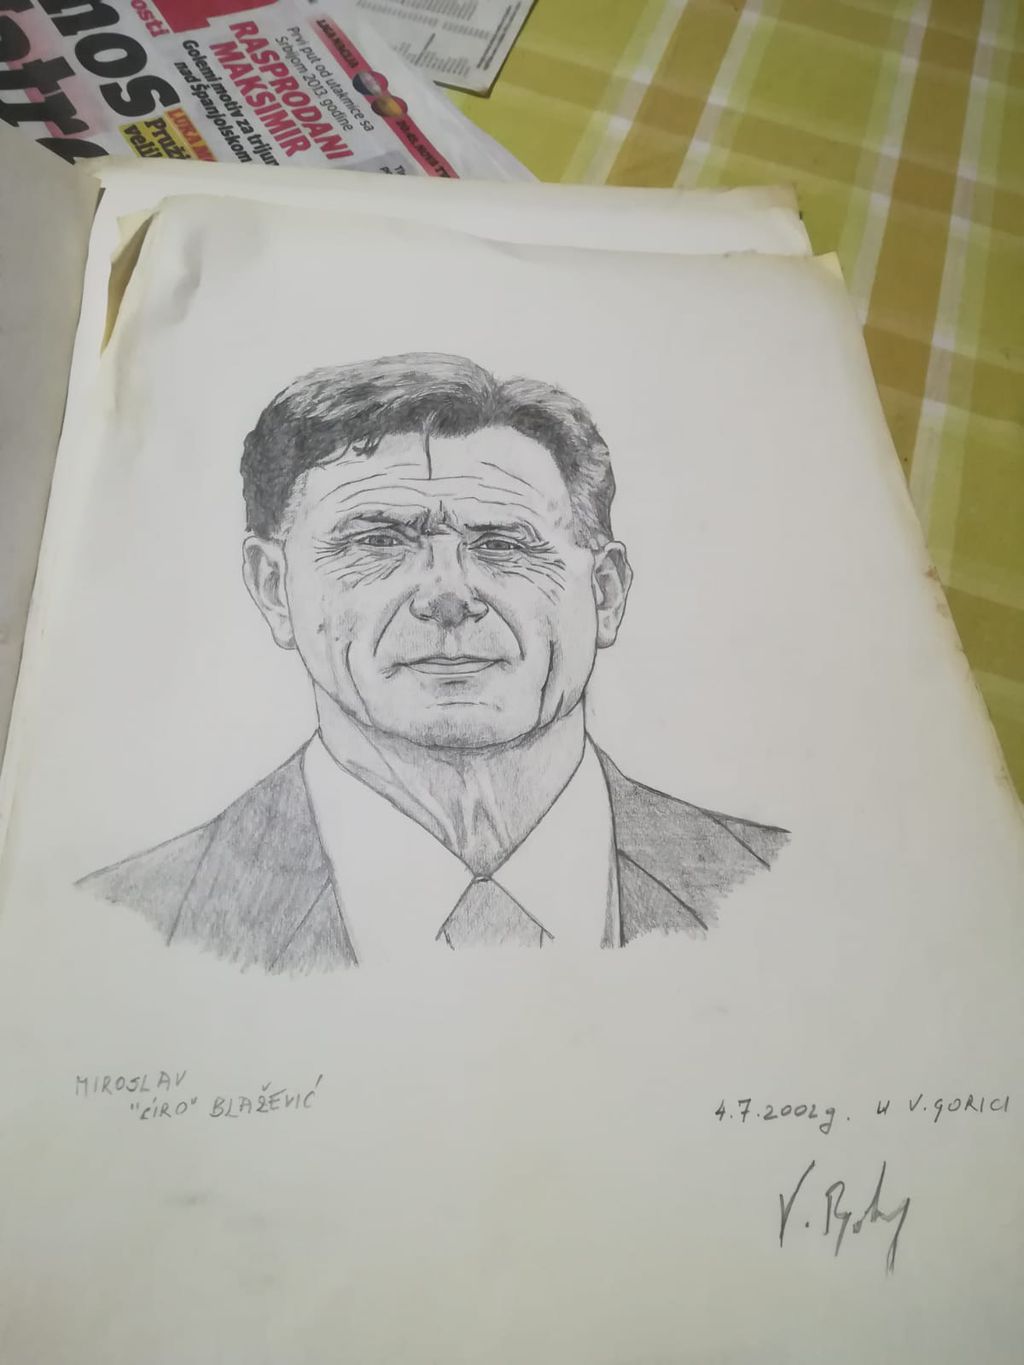 Bobanov crtež Ćire Blaževića